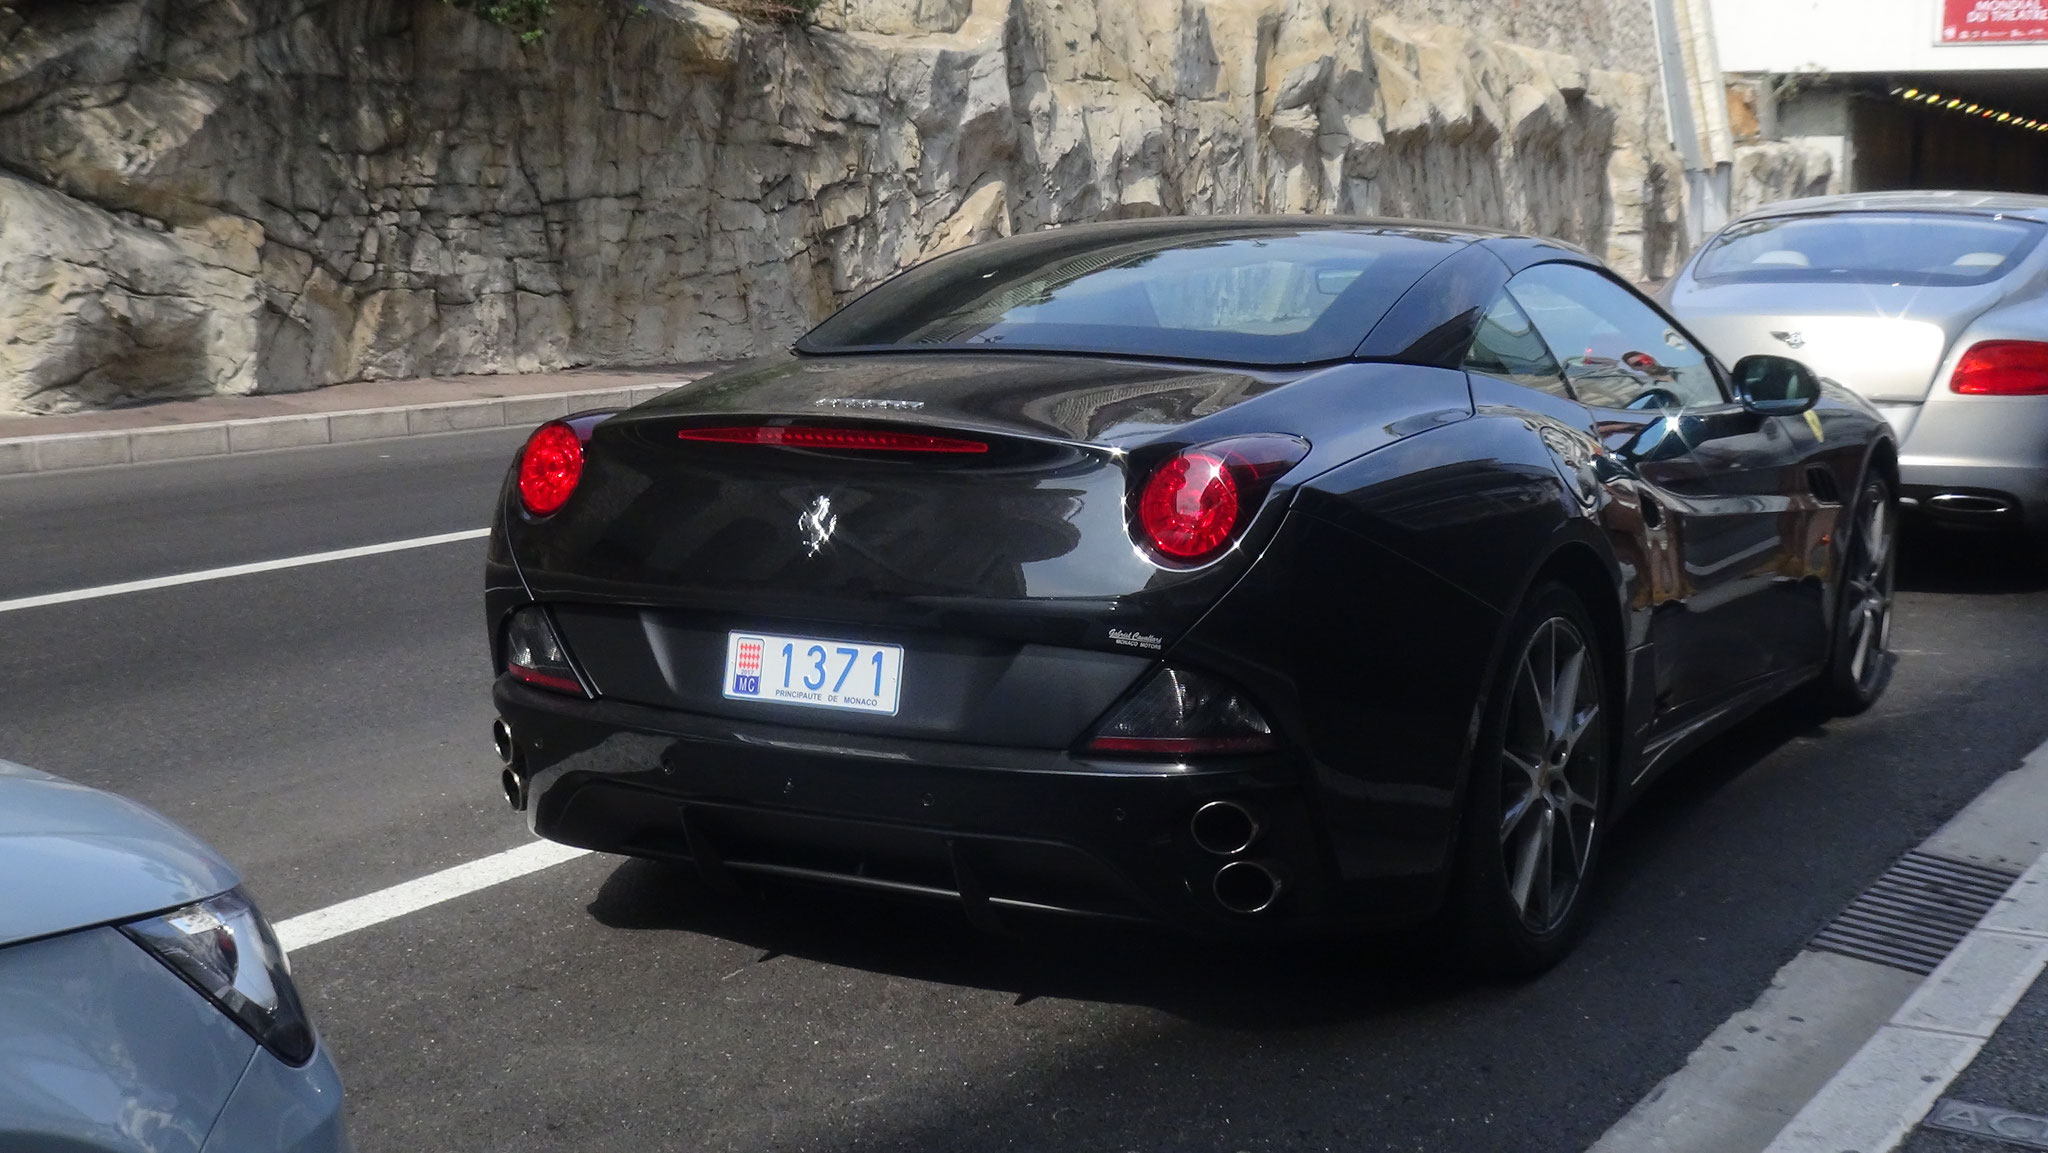 Ferrari California - 1371 (MC)